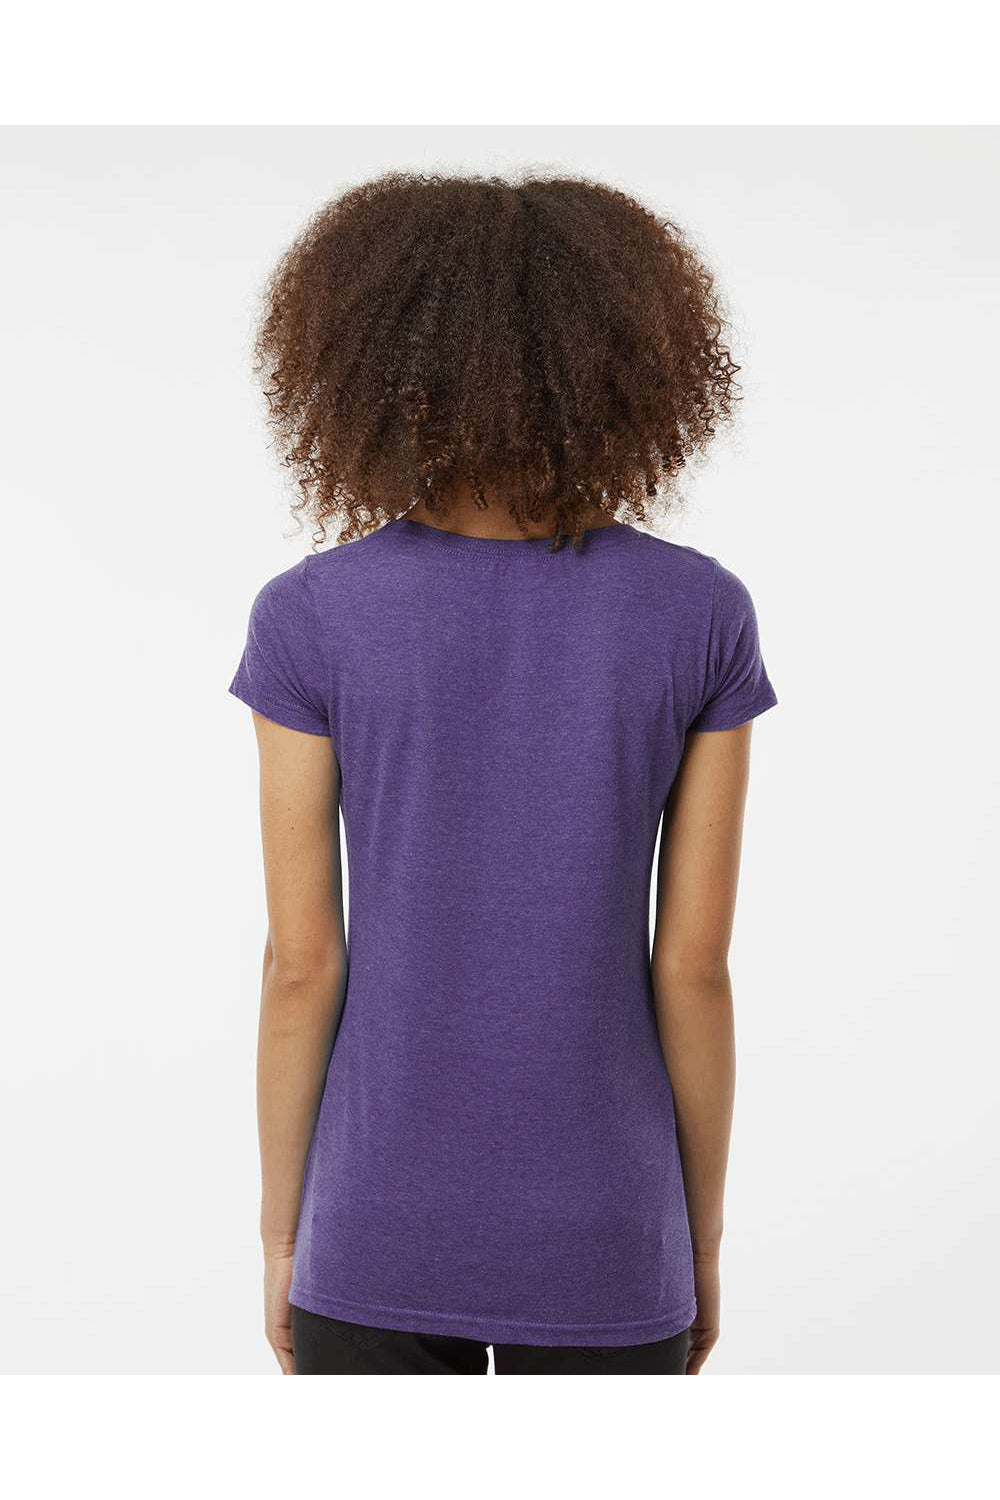 Tultex 243 Womens Poly-Rich Short Sleeve Scoop Neck T-Shirt Heather Purple Model Back